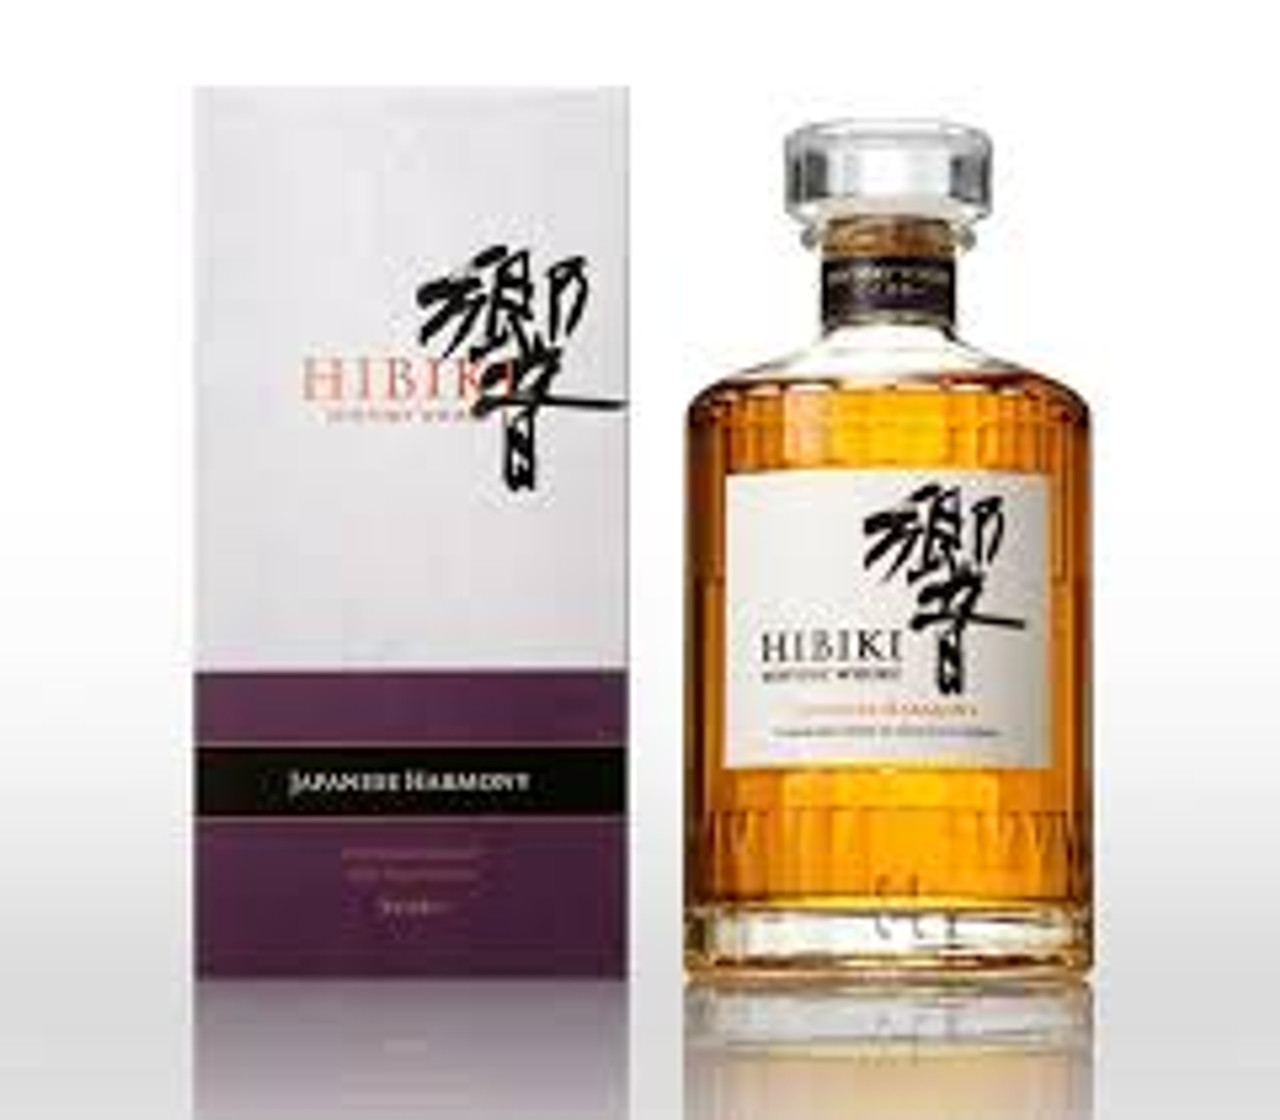 Hibiki Japanese Harmony - The Whisky Shop - San Francisco